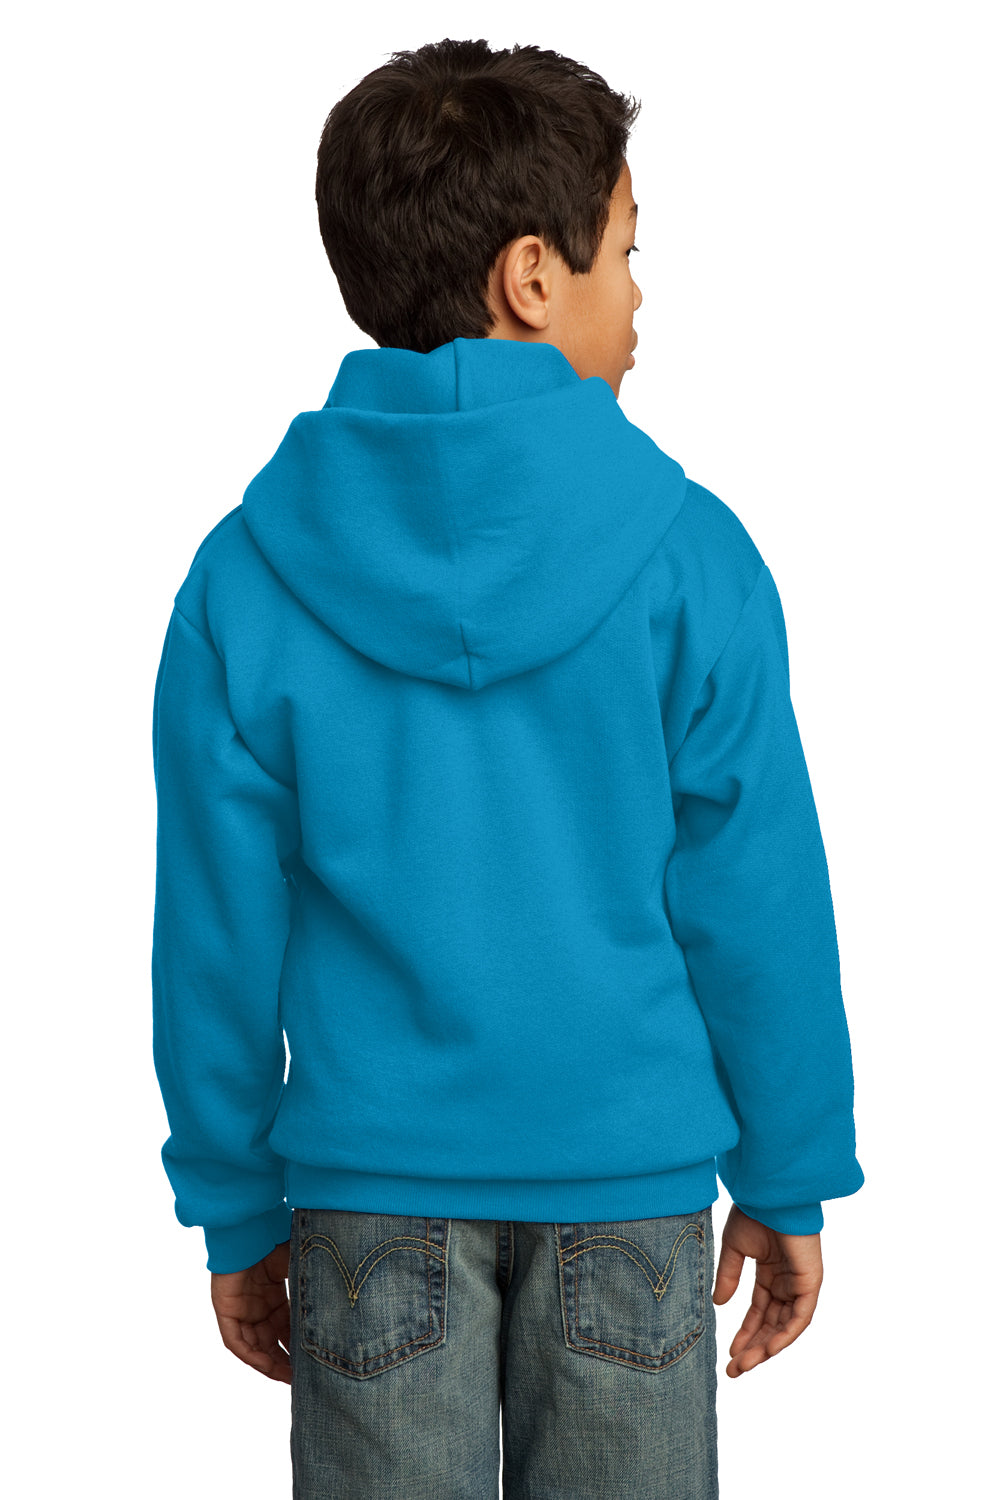 Port & Company PC90YH Youth Core Fleece Hooded Sweatshirt Hoodie Neon Blue Back